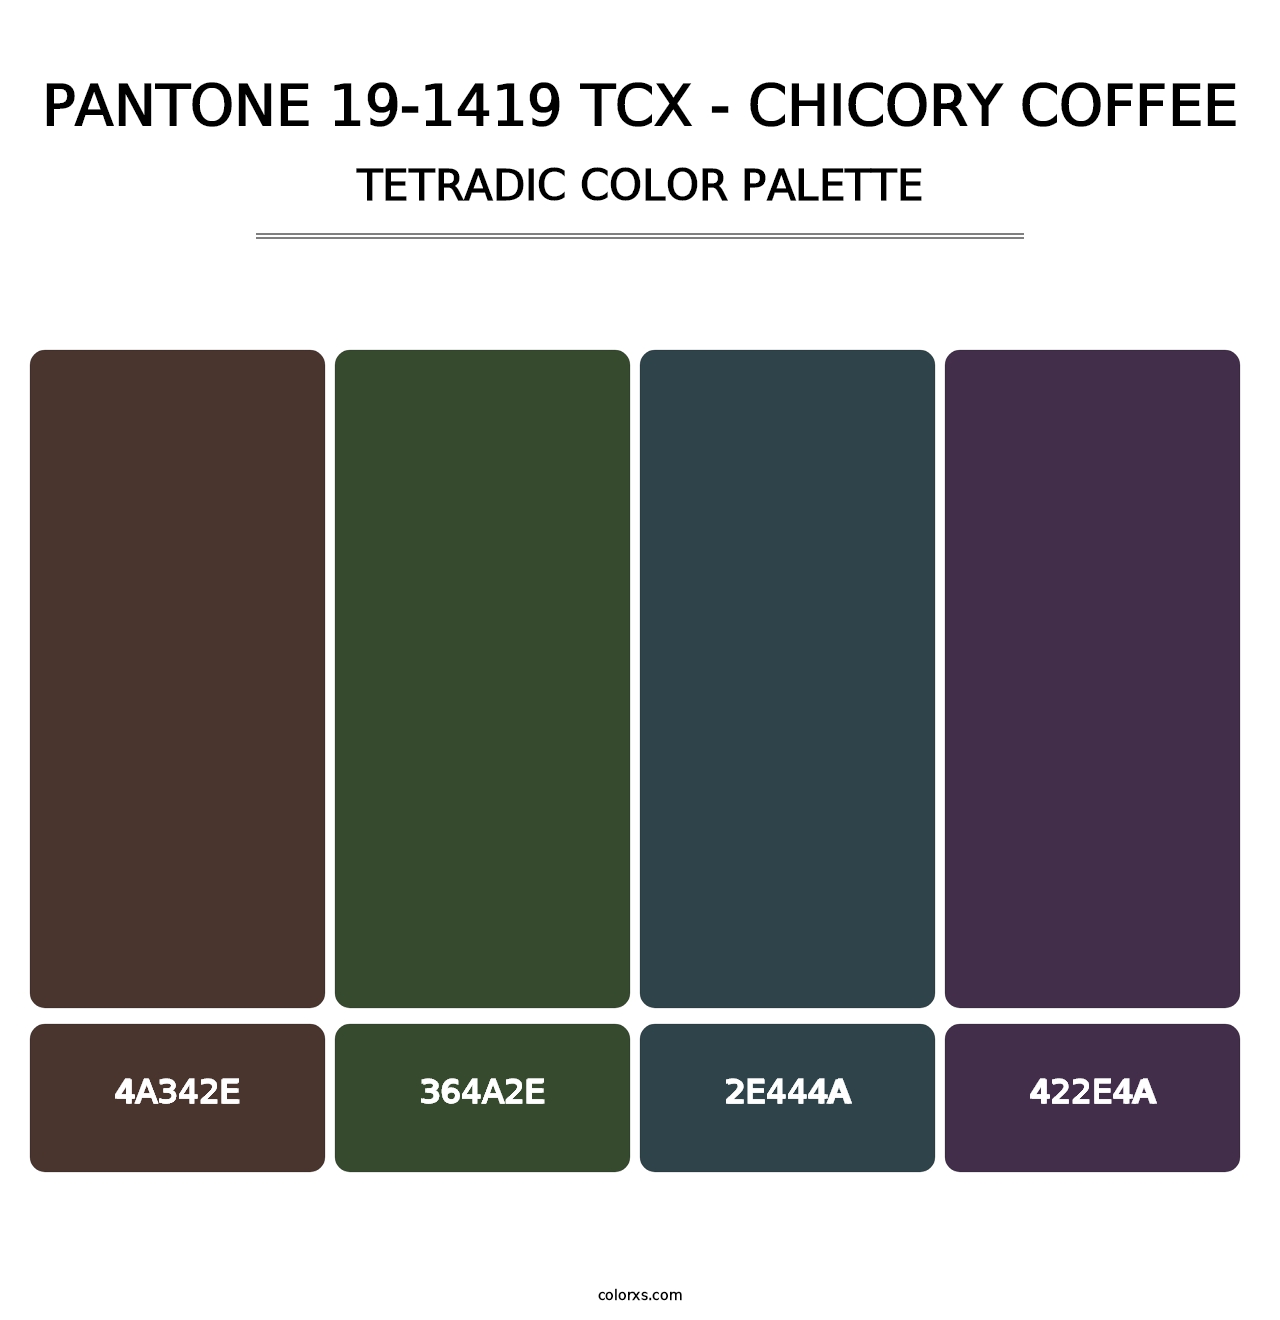 PANTONE 19-1419 TCX - Chicory Coffee - Tetradic Color Palette